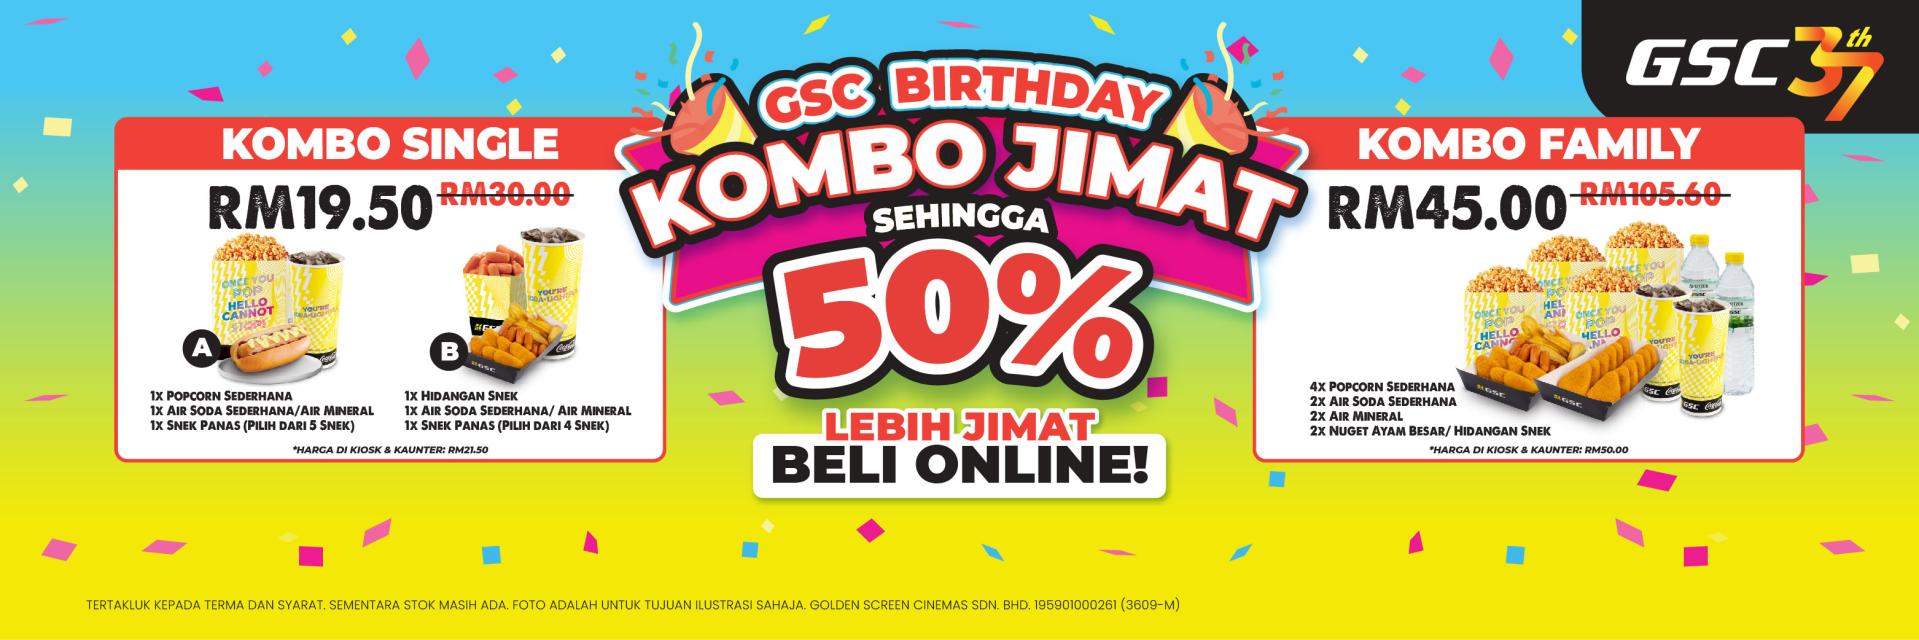 Kombo Jimat GSC 37th Birthday